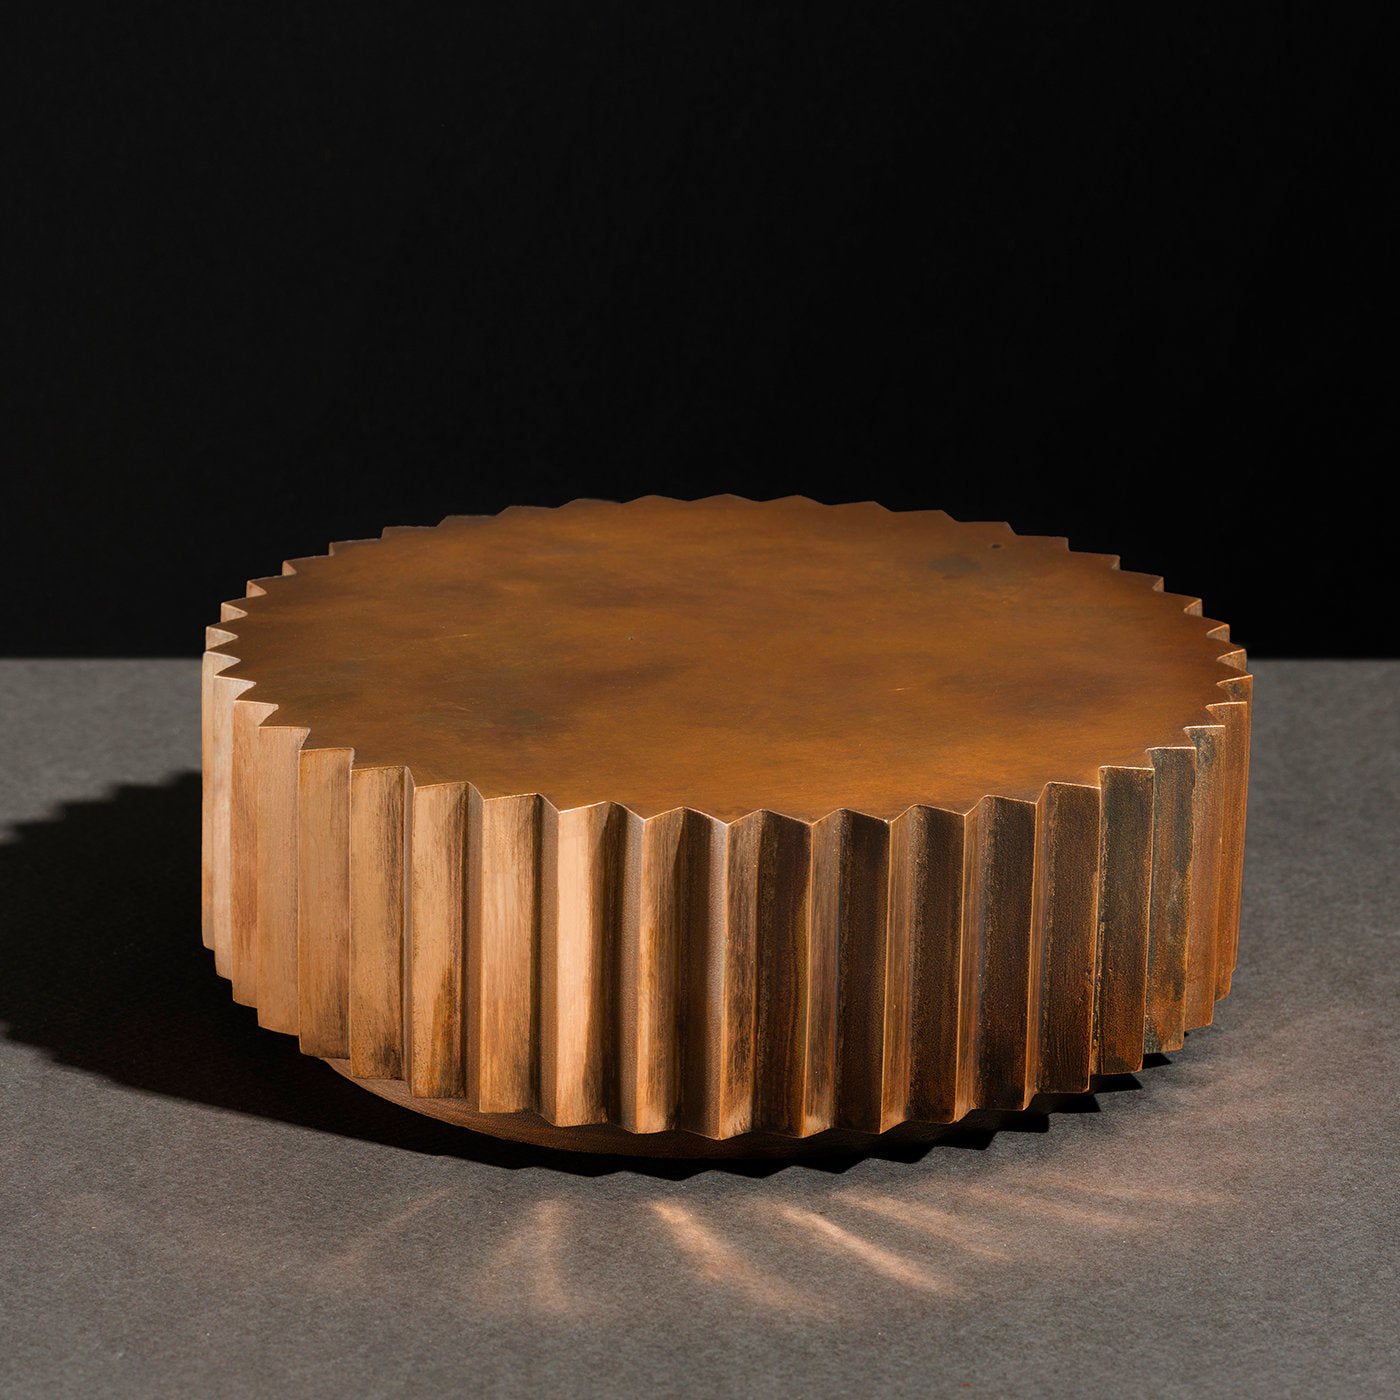 Doris Cast Oxidized Bronze Multifaceted Coffee Table - Alternative view 1